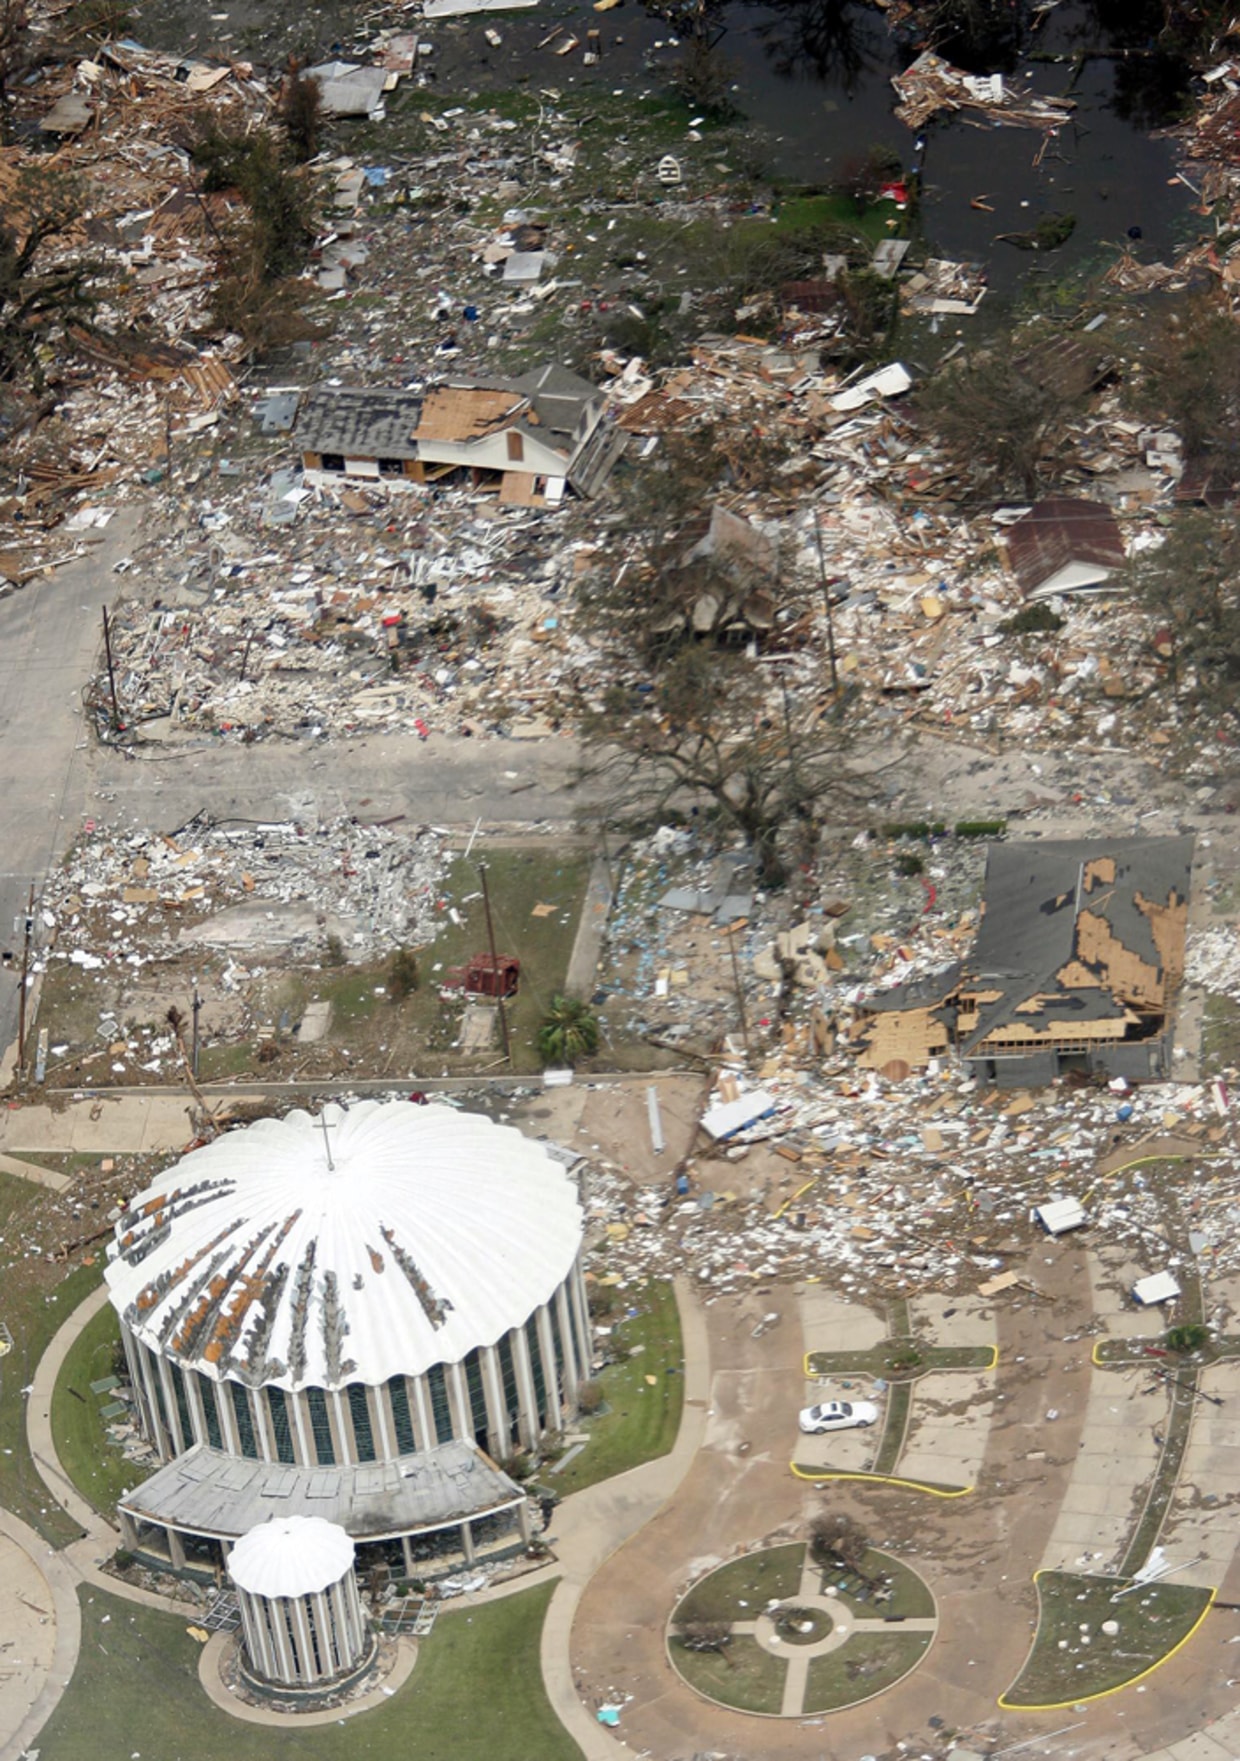 Biloxi is 'completely flattened' by Katrina